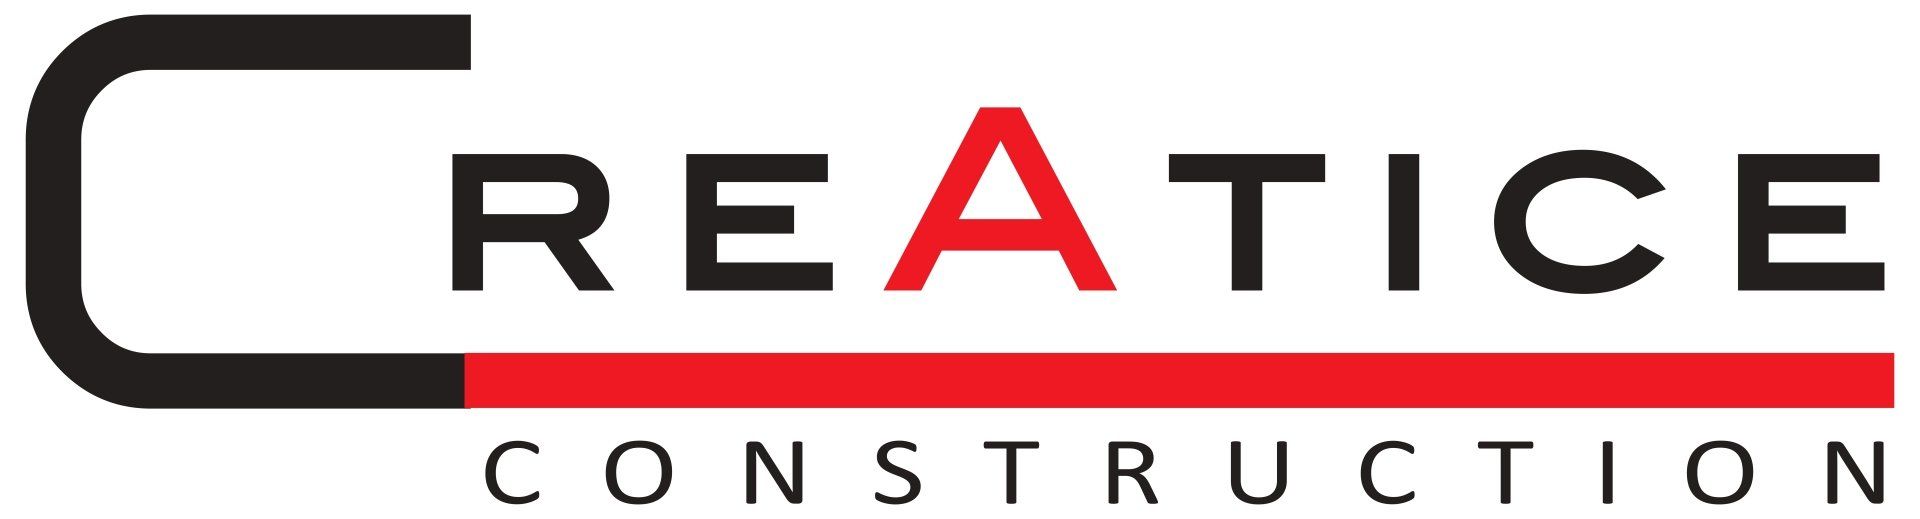 Logo de Créatice construction